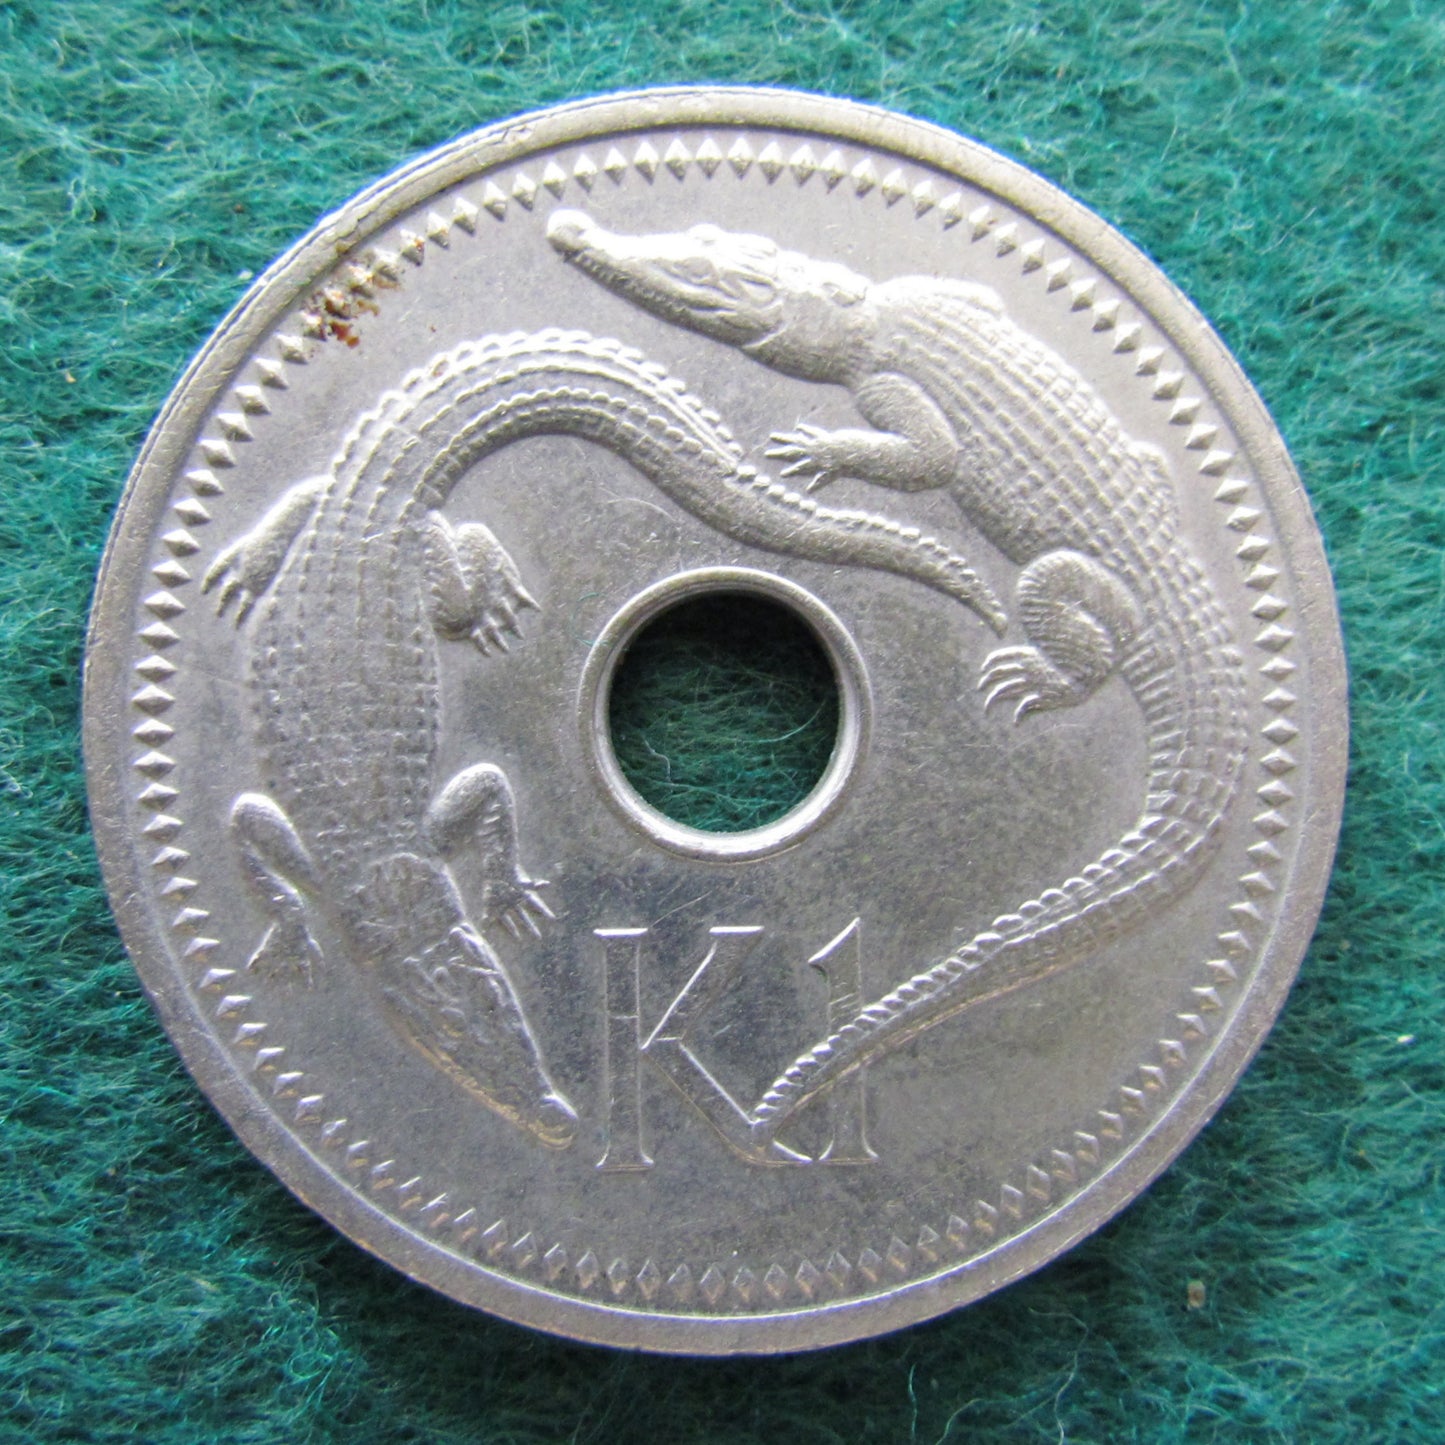 New Guinea 1975 1 One Kina Coin